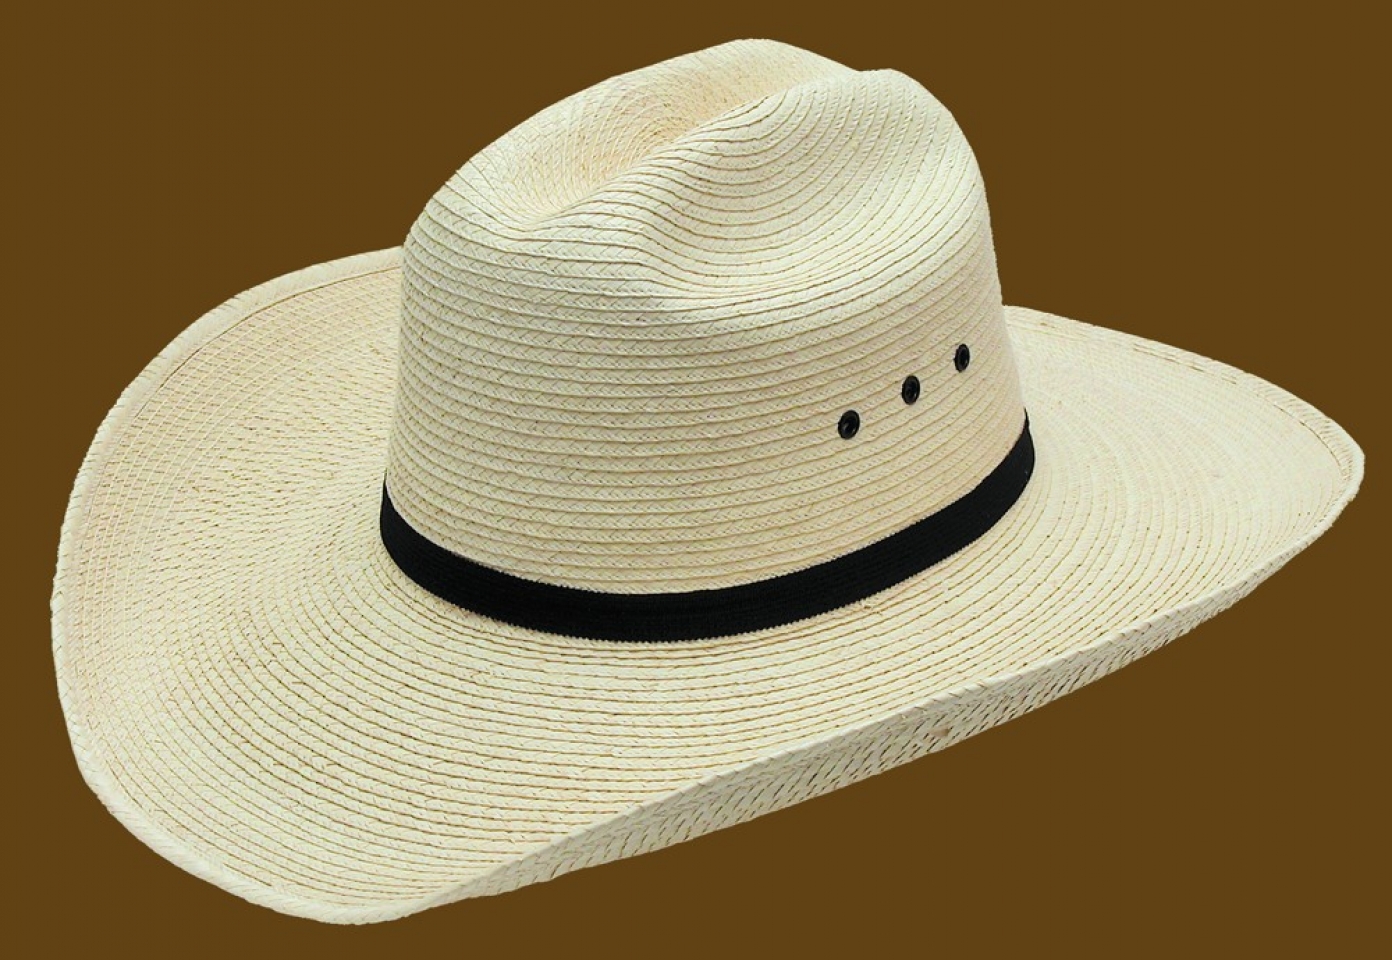 Straw Cowboy Hat Llanero Hat Cattleman Crease Palm Leaf Red Tassel Size 6 7...